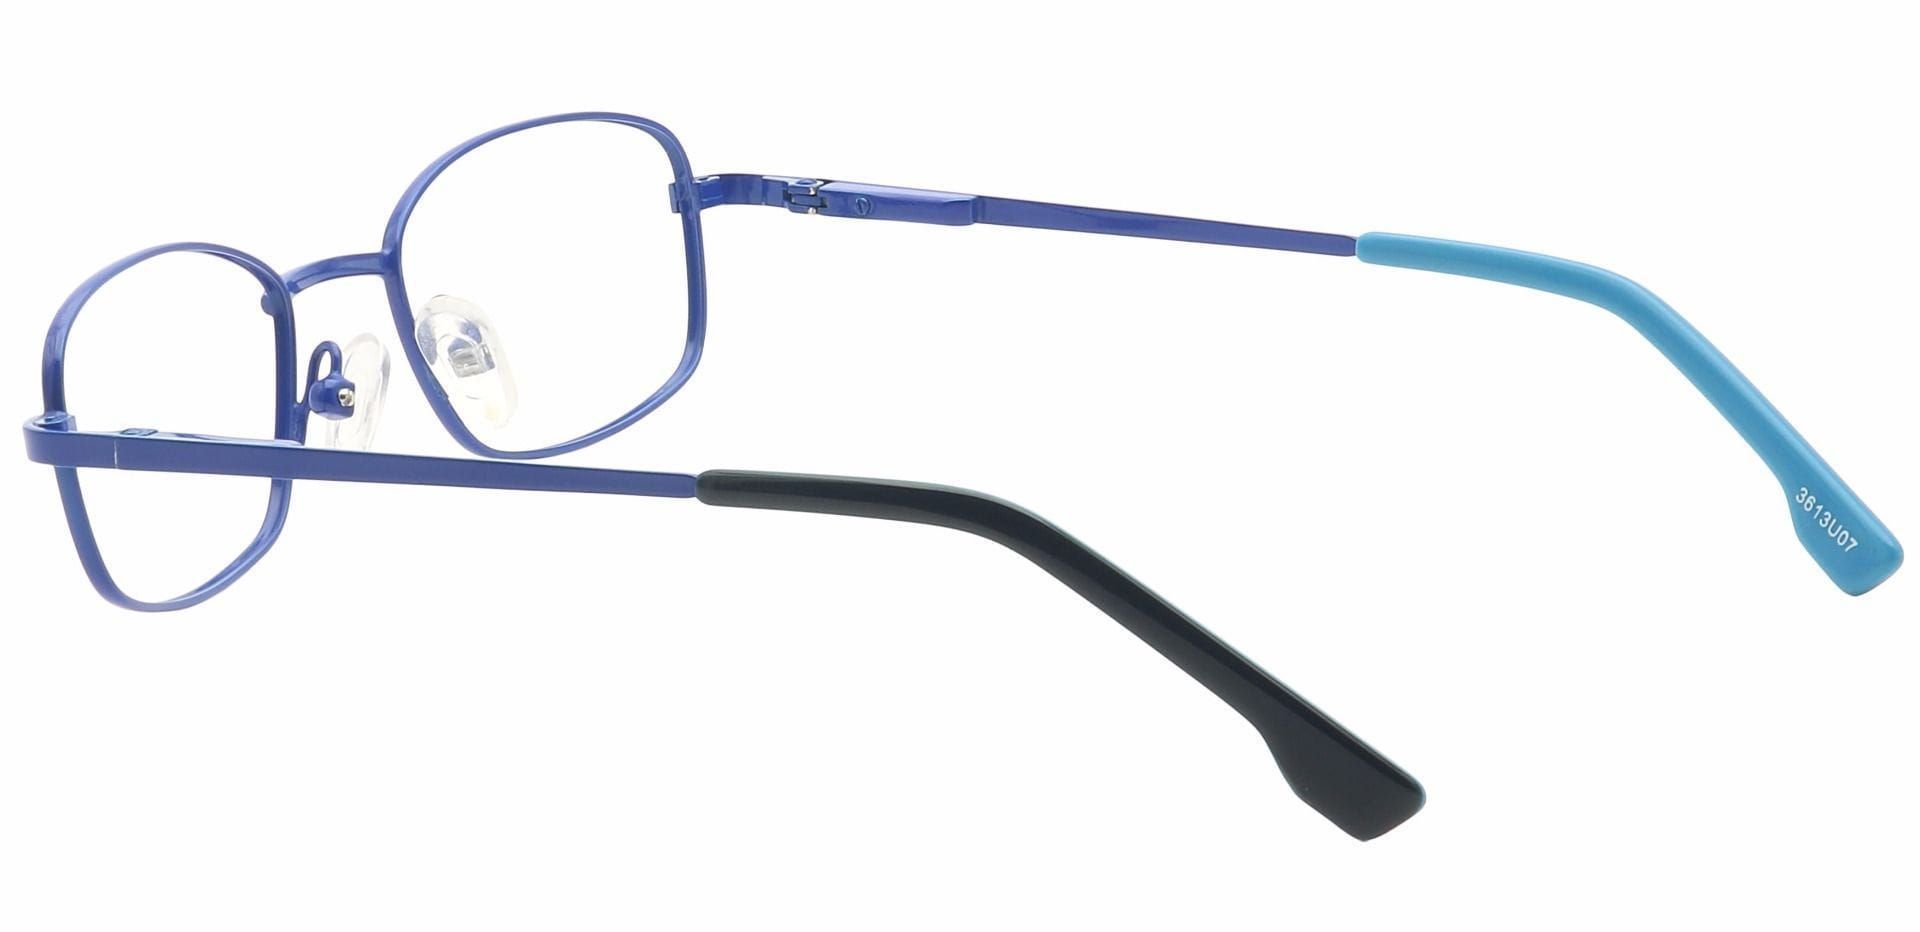 Gil Rectangle Single Vision Glasses - Blue